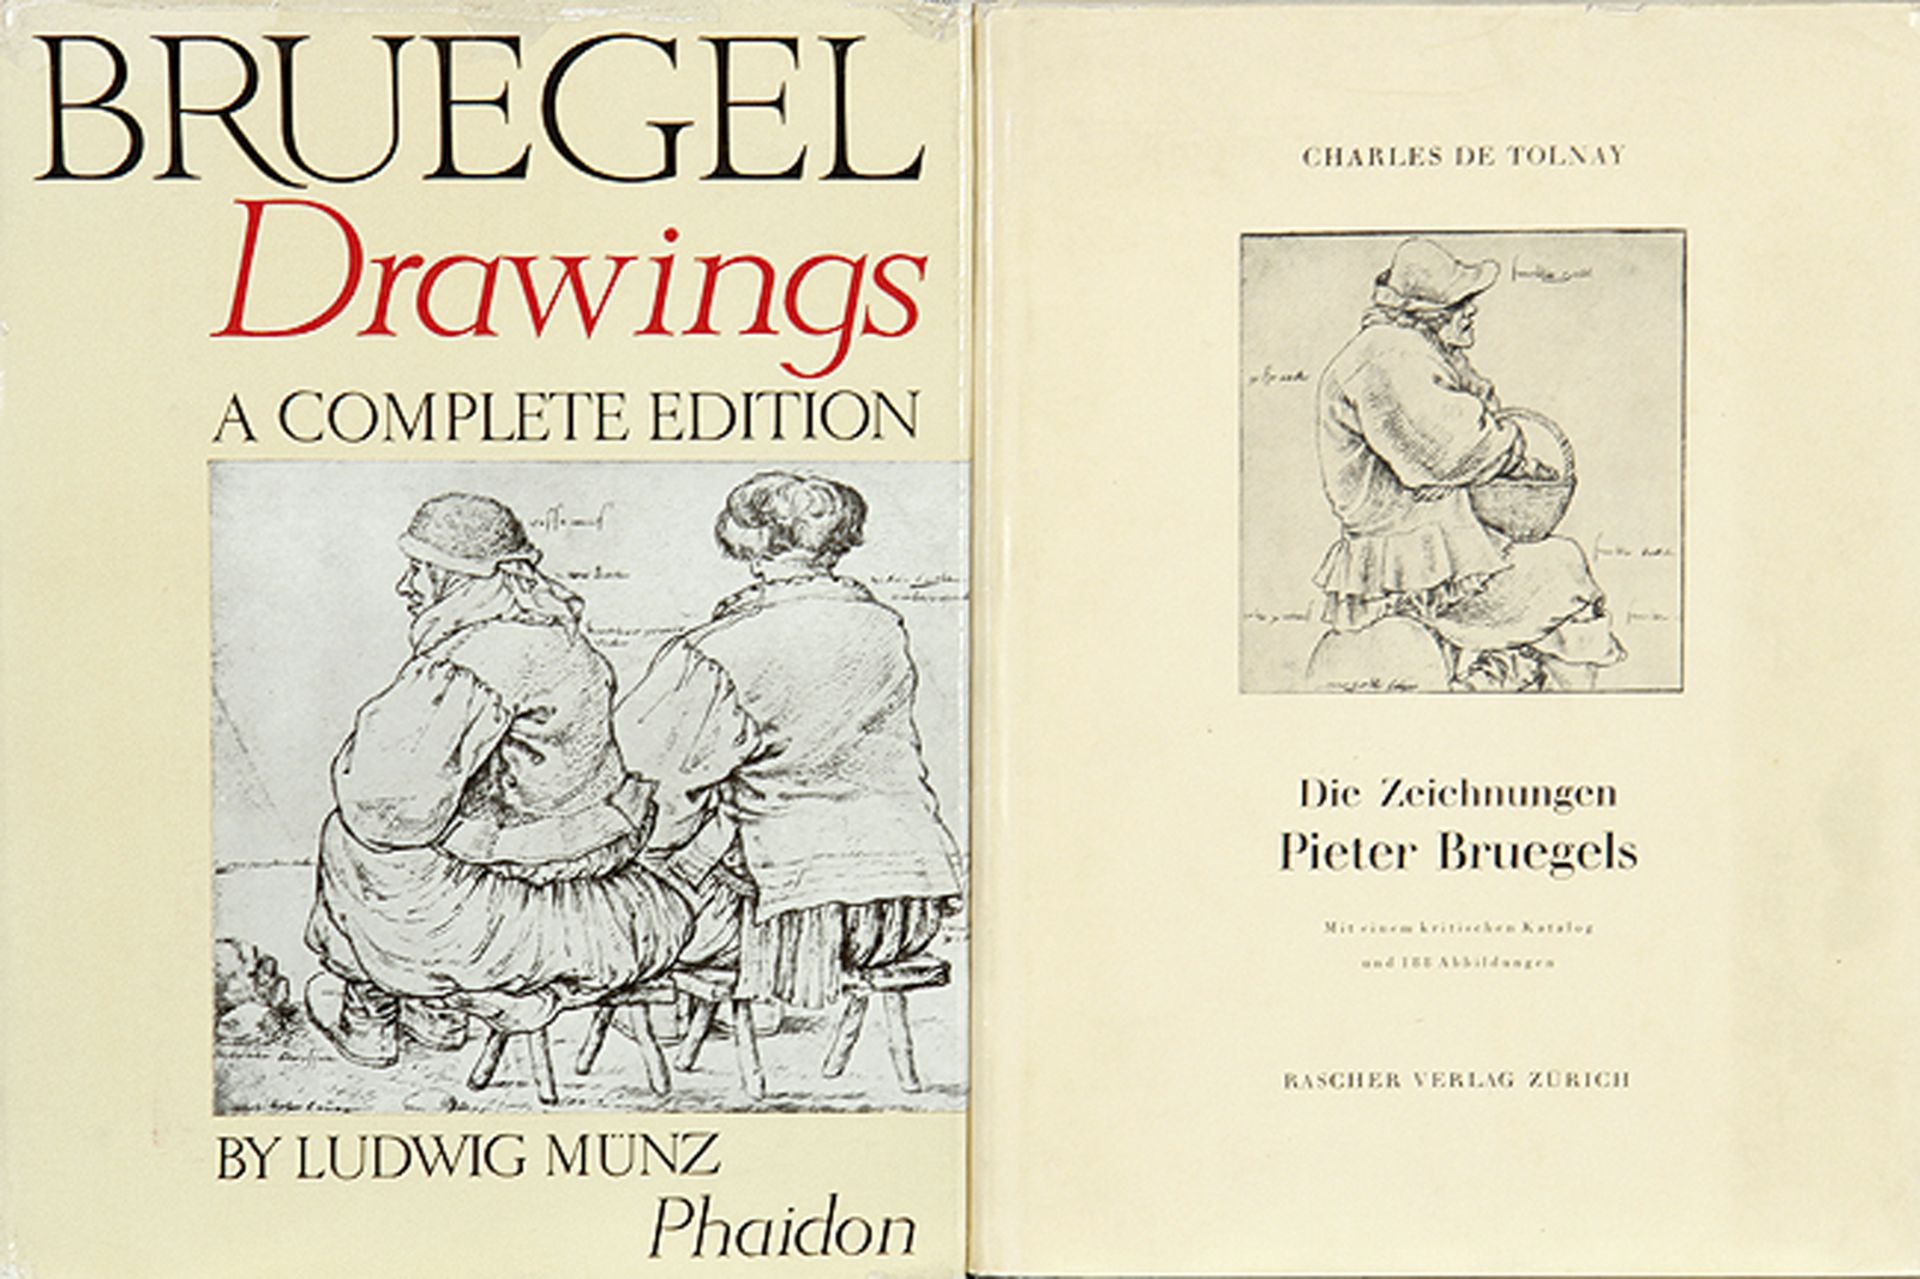 PIETER BRUEGHEL DER ÄLTERE: Tolnay, Charles de; Die Zeichnungen Pieter Bruegels (mit einem kritisch